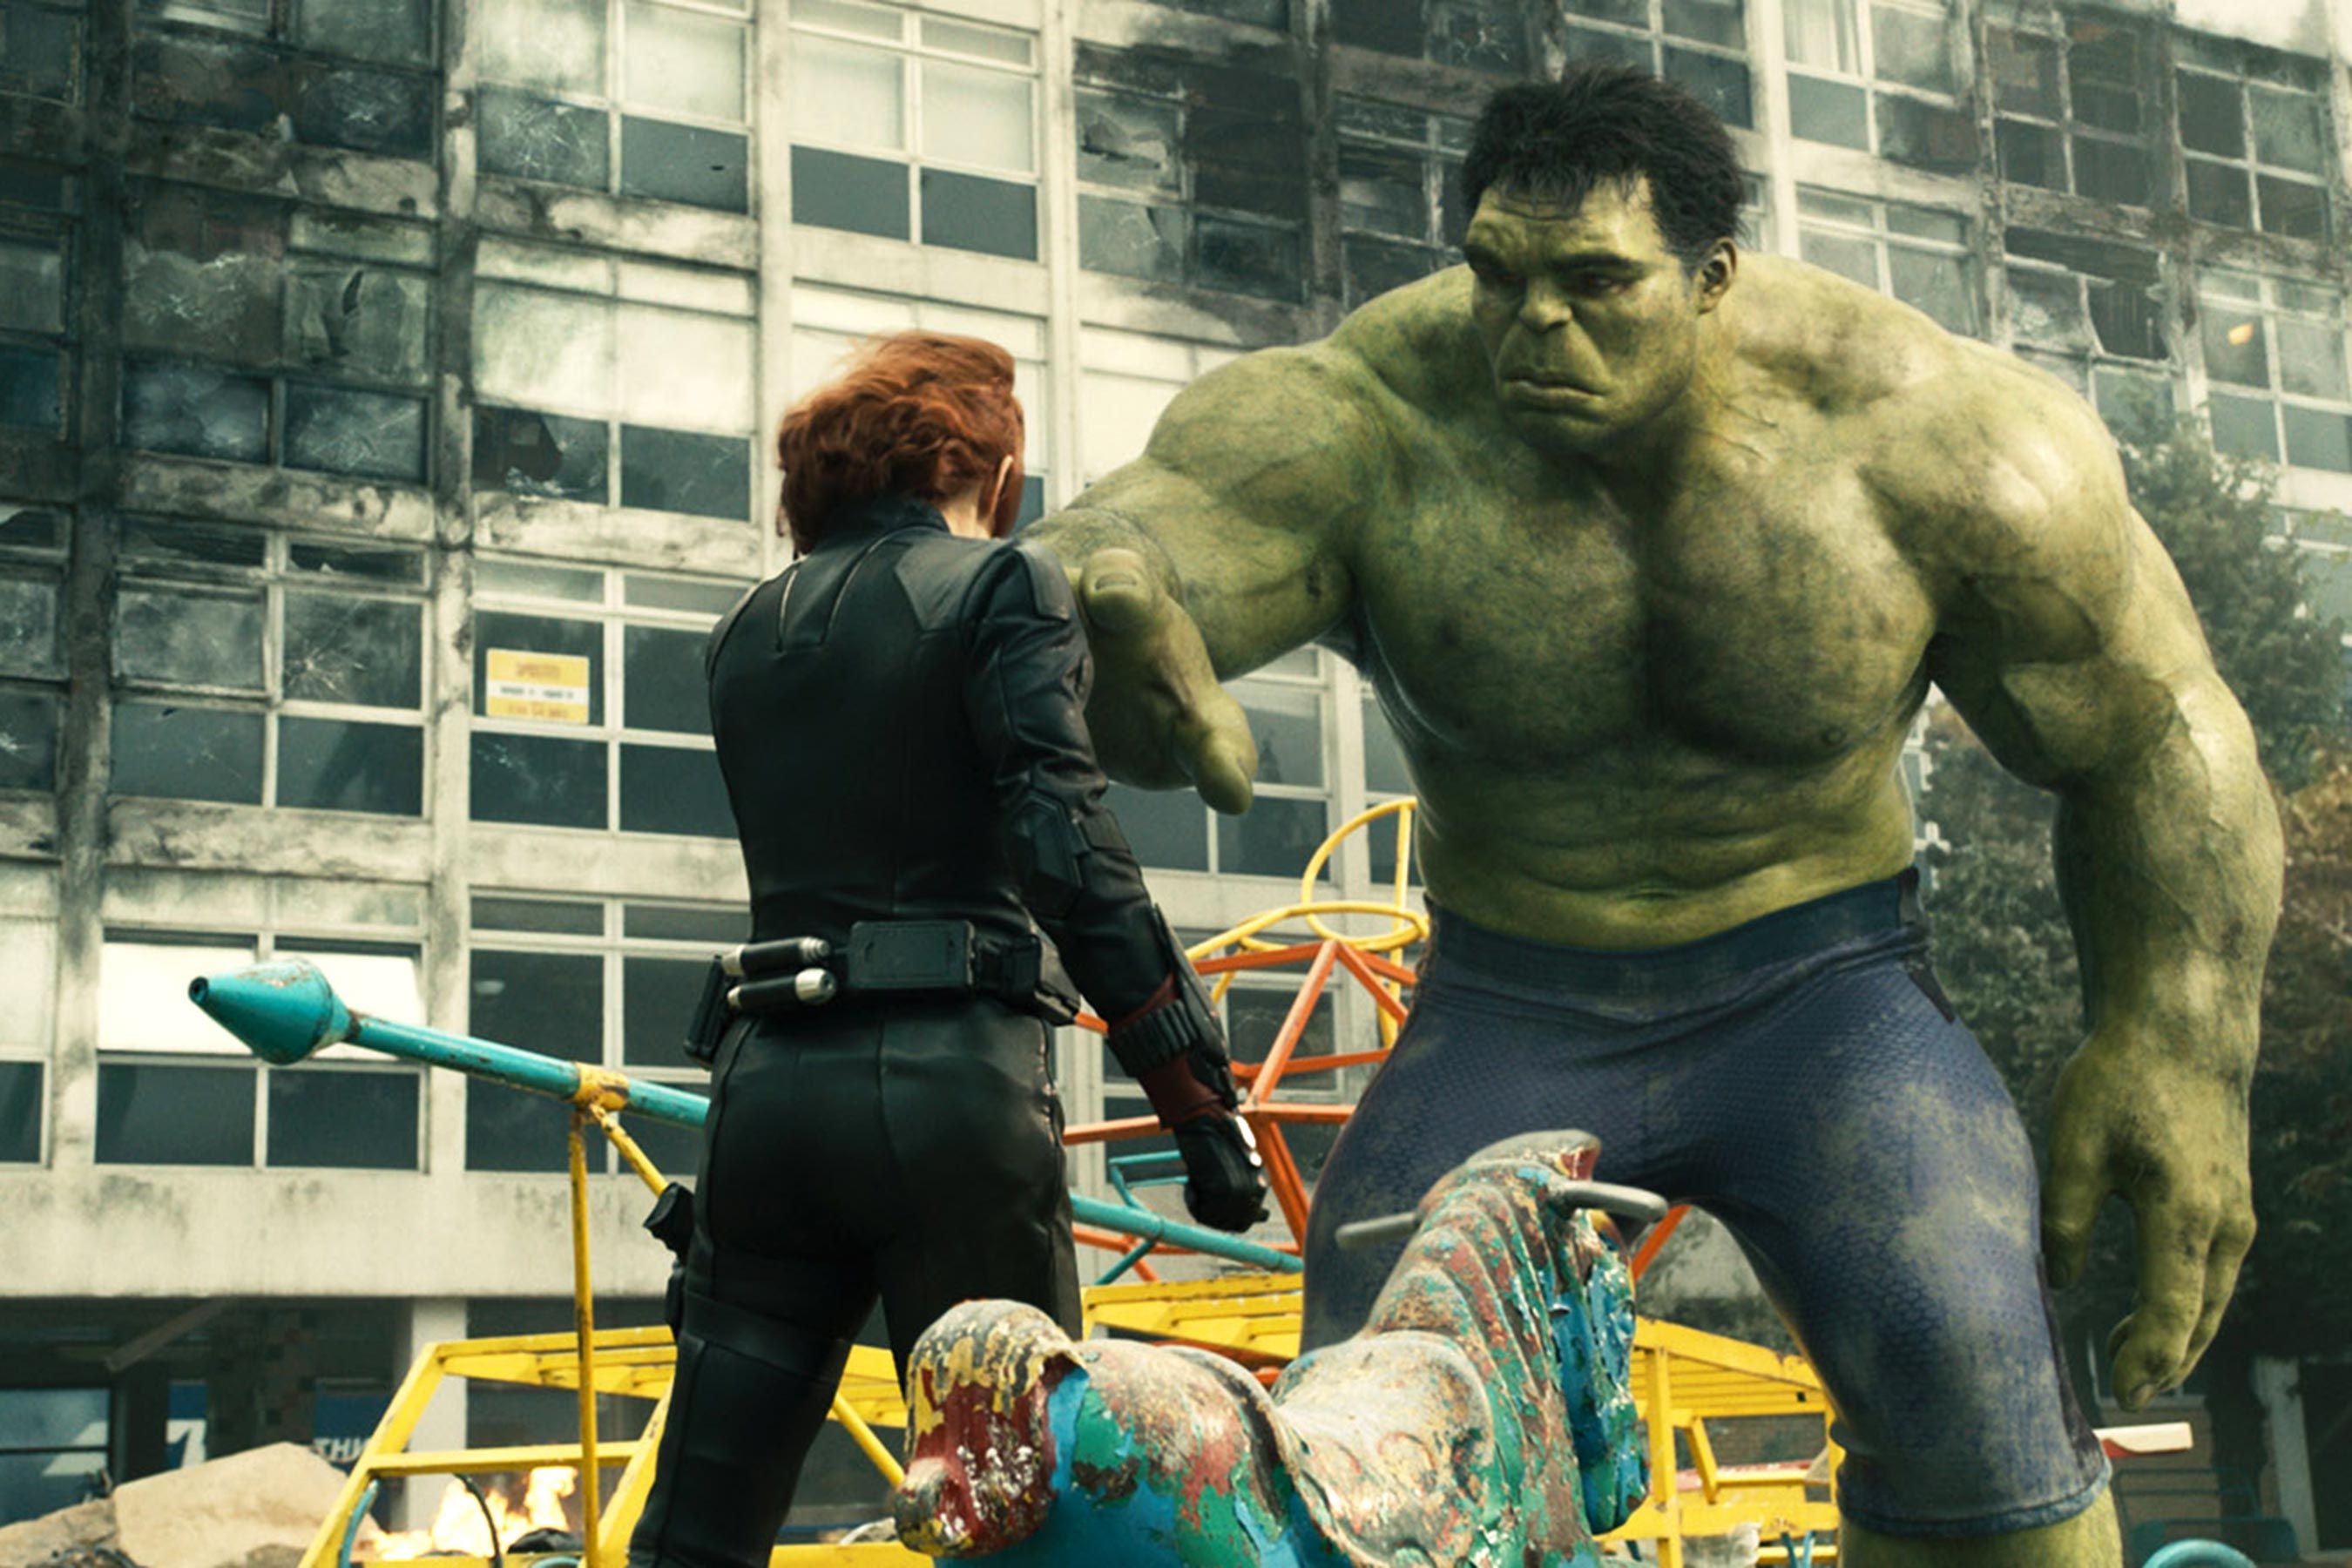 Negligencia médica Menagerry Obligatorio Vengadores Endgame Hulk Viuda Negra Relacion - Guionistas Explican